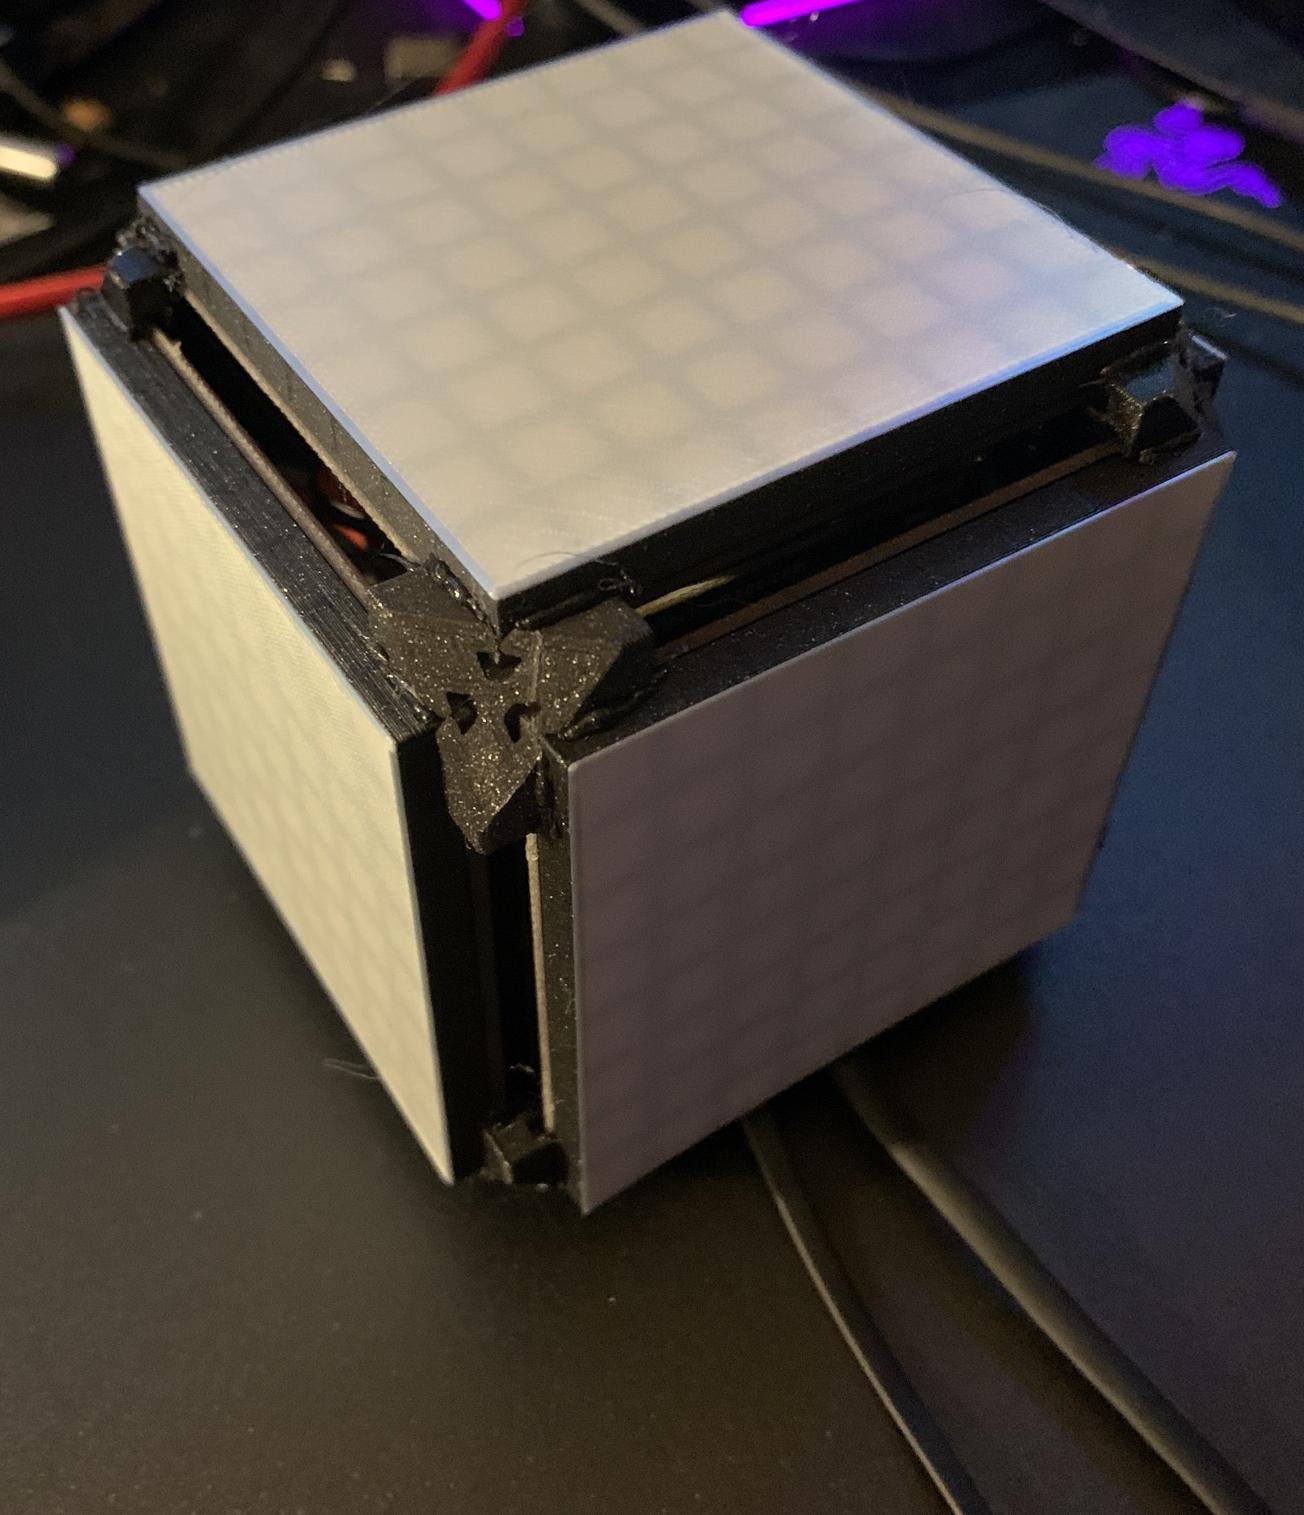 assembled cube of panels